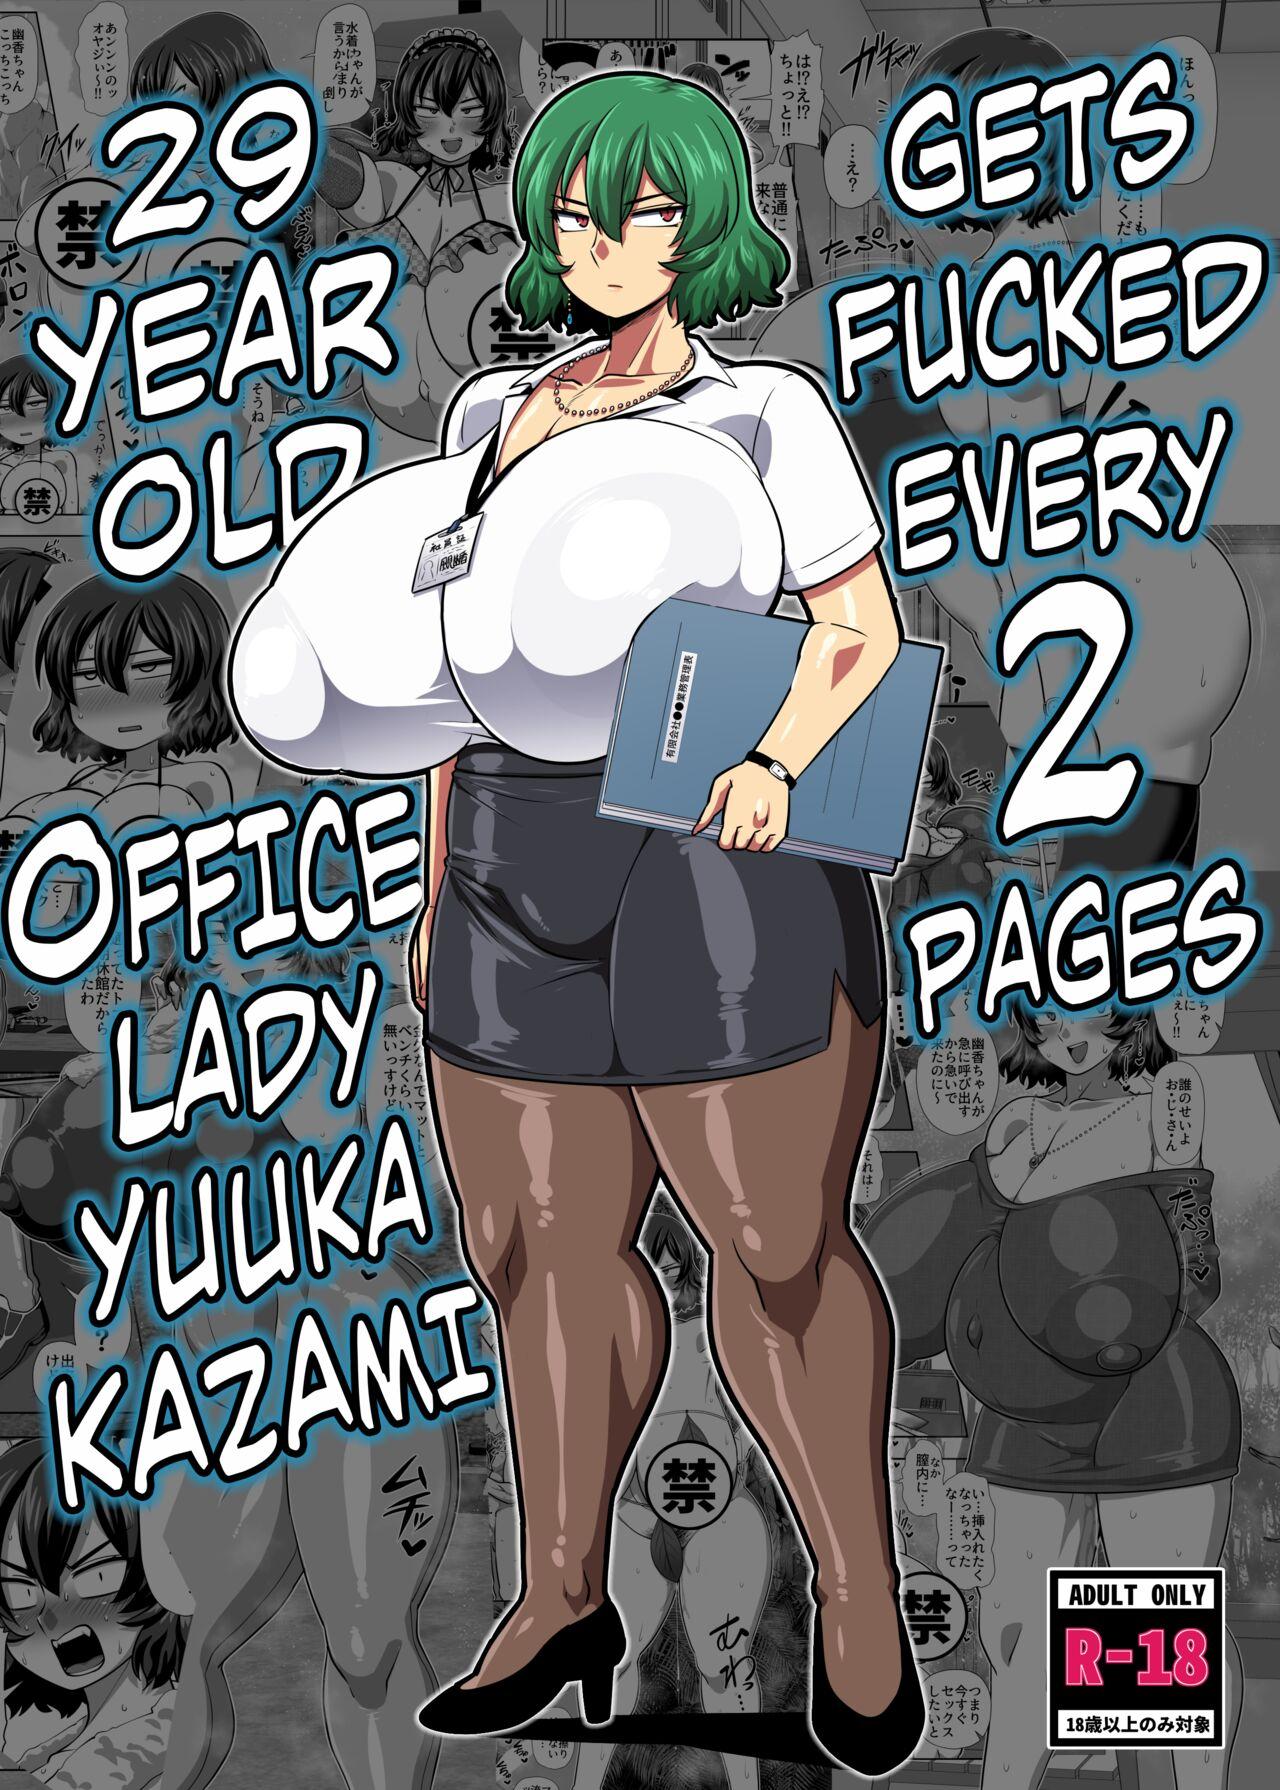 Gay Smoking 2 Page Goto ni Sokuhame Sareru Kazami Yuuka 29-sai OL | 29 Year Old Office Lady Yuuka Kazami Gets Fucked Every 2 Pages - Touhou project Rabo - Picture 1